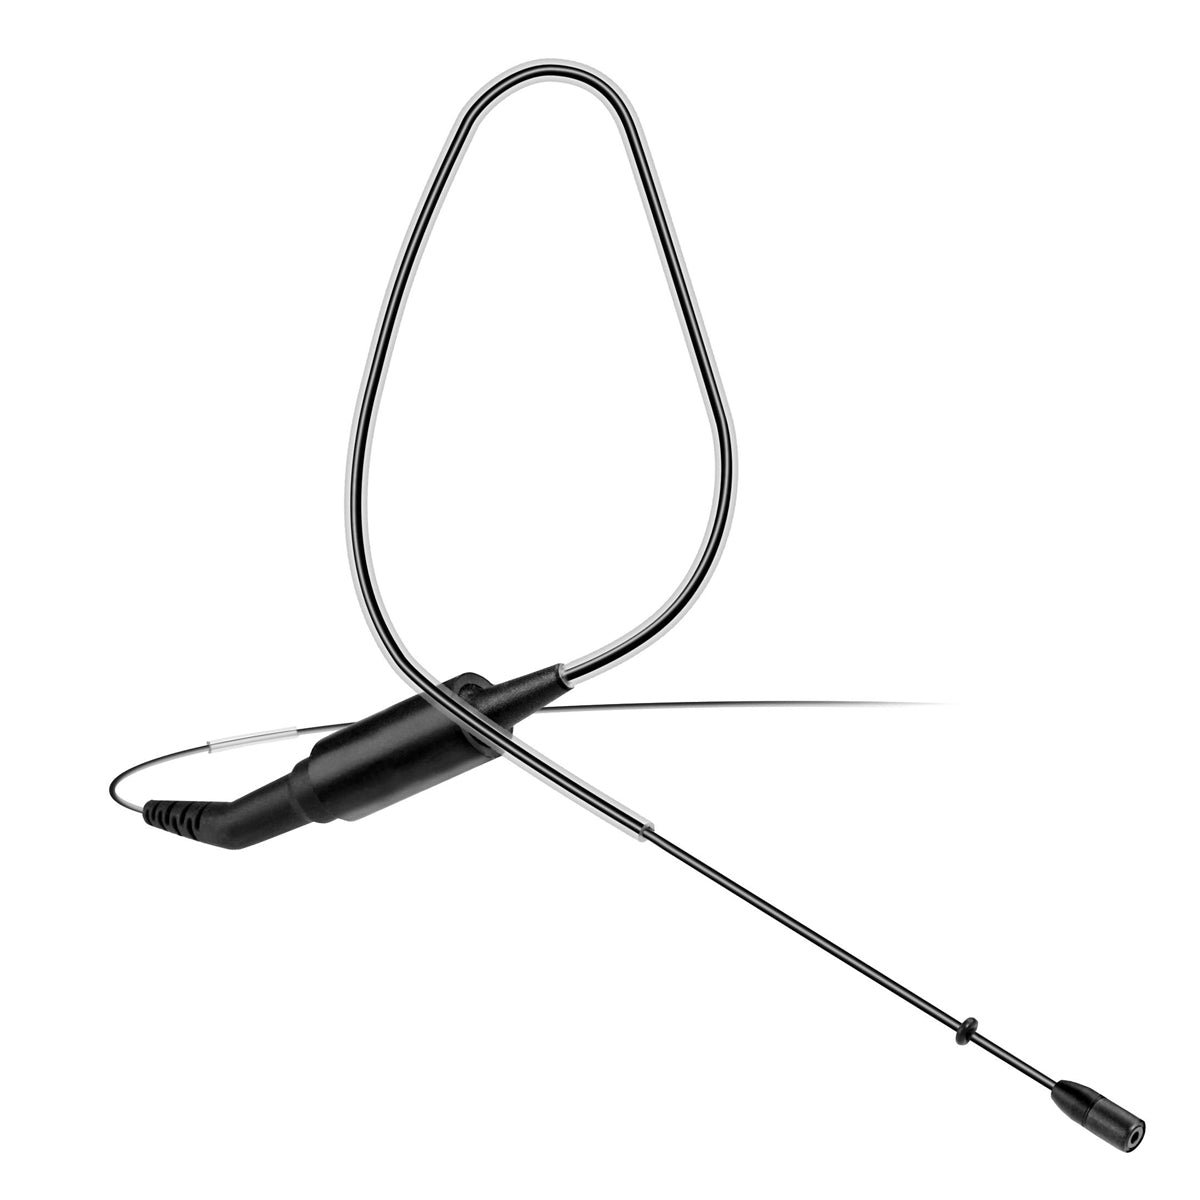 Sennheiser Ear Set 4-EW Ear Worn Microphone, Black, 3.5mm Jack Plug